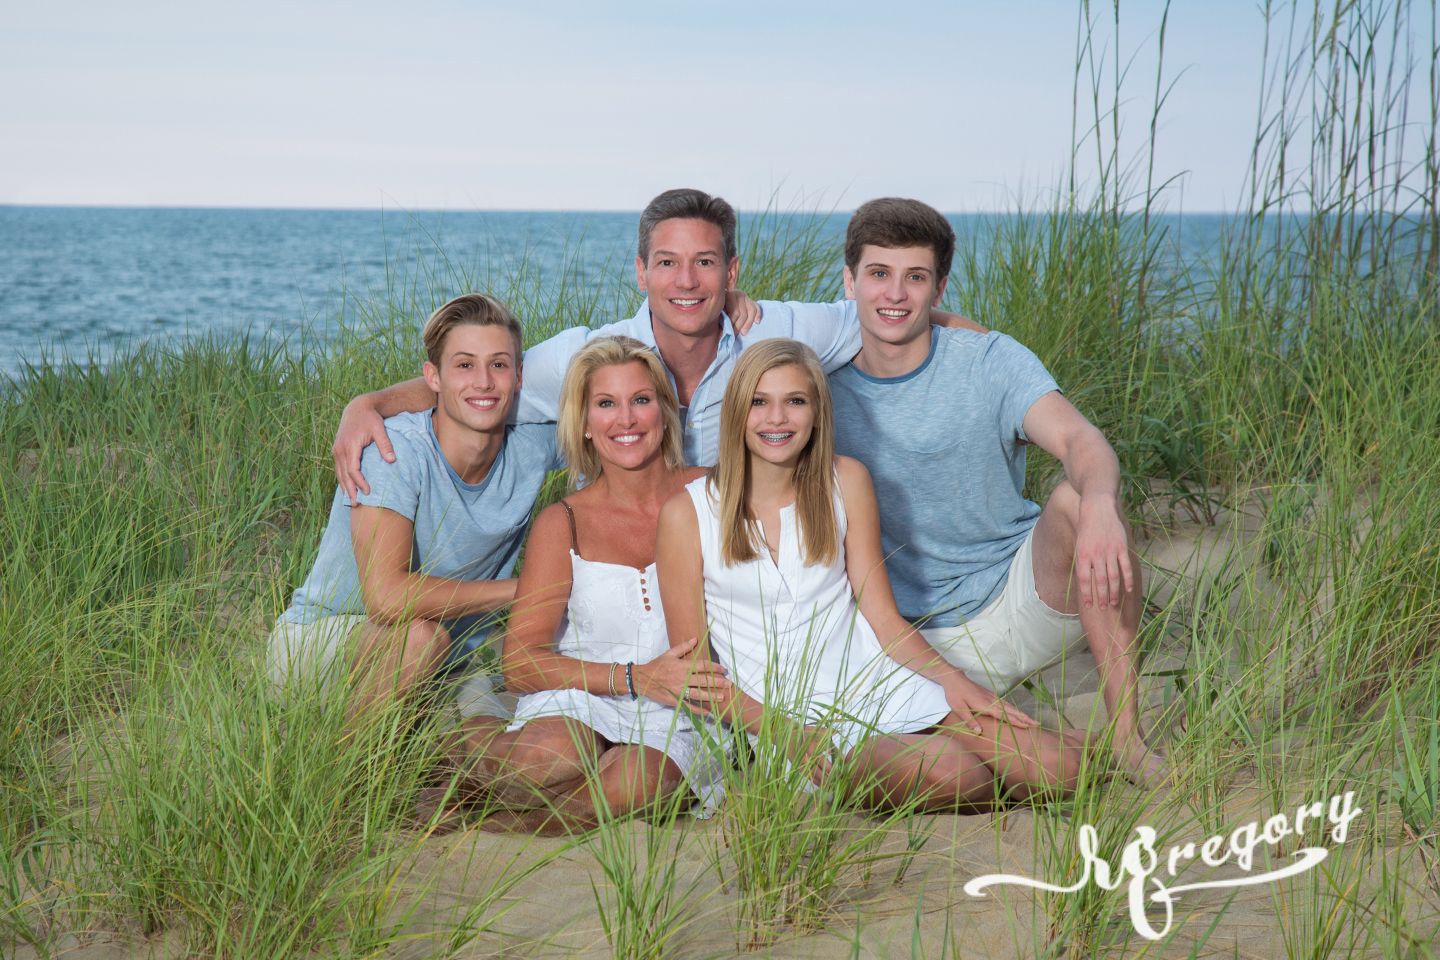 Mayer family portrait on beach in grass va